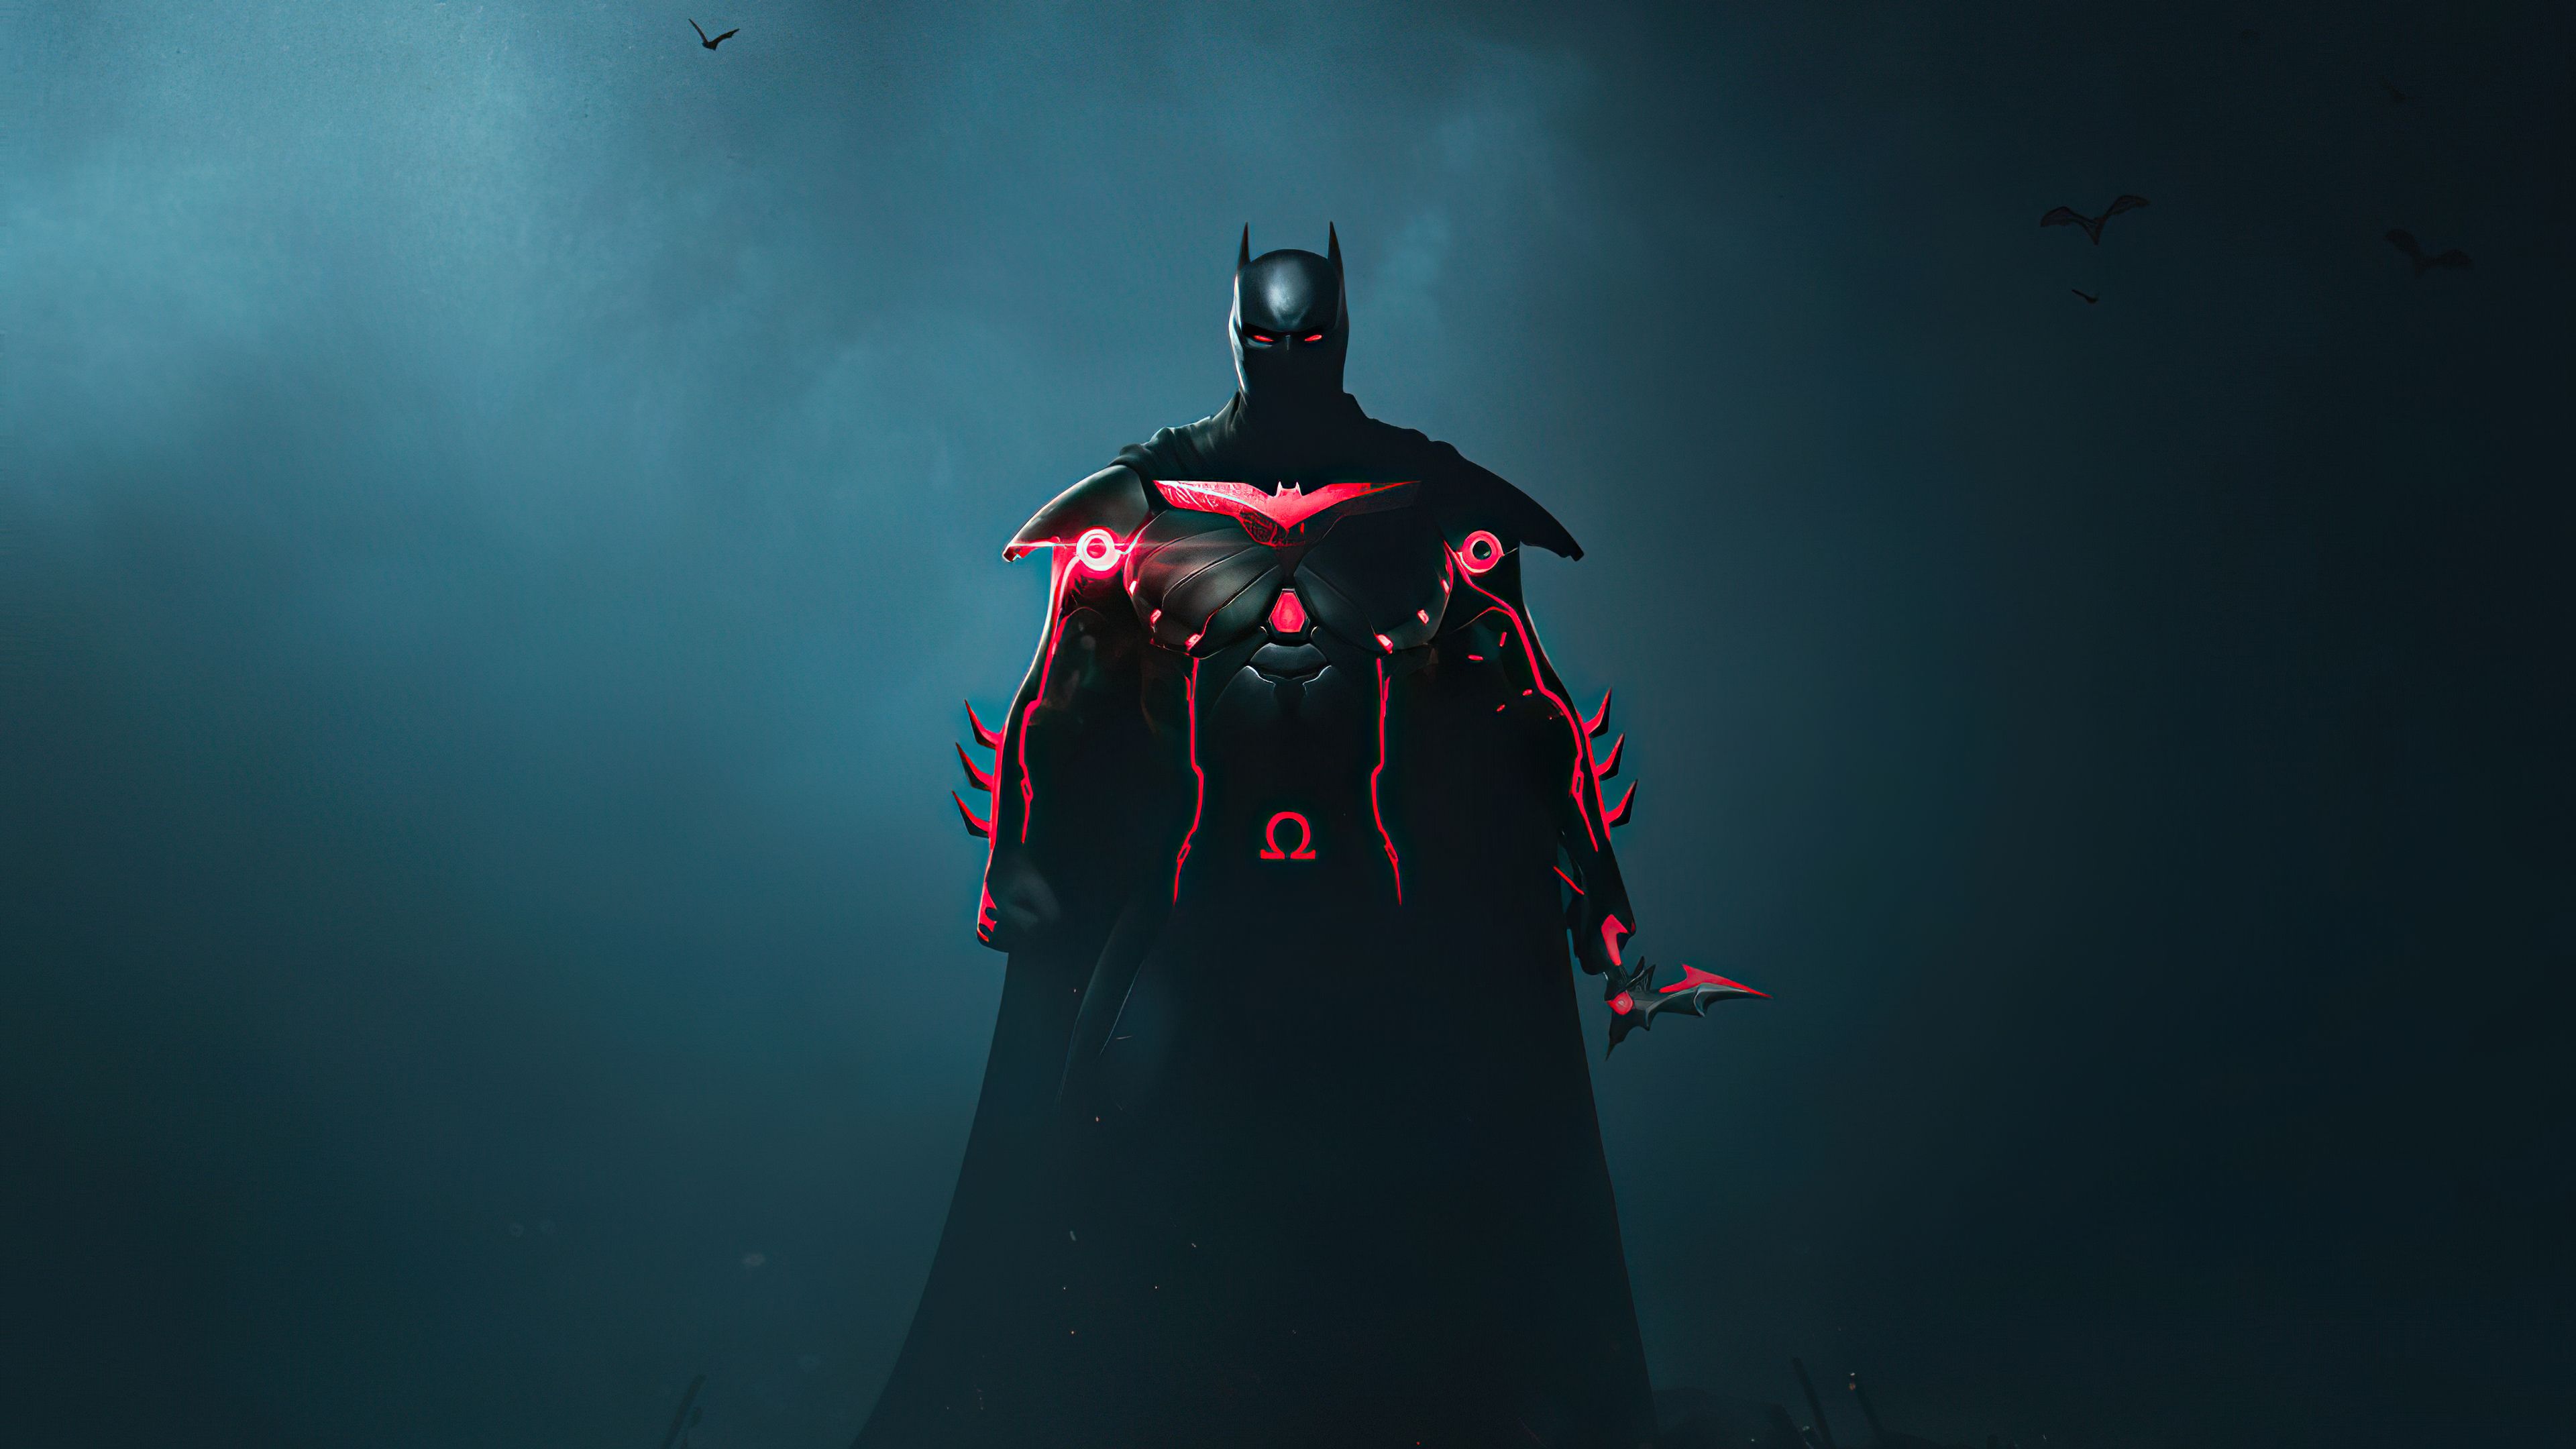 Batman Apocalypse, HD Superheroes, 4k Wallpaper, Image, Background, Photo and Picture